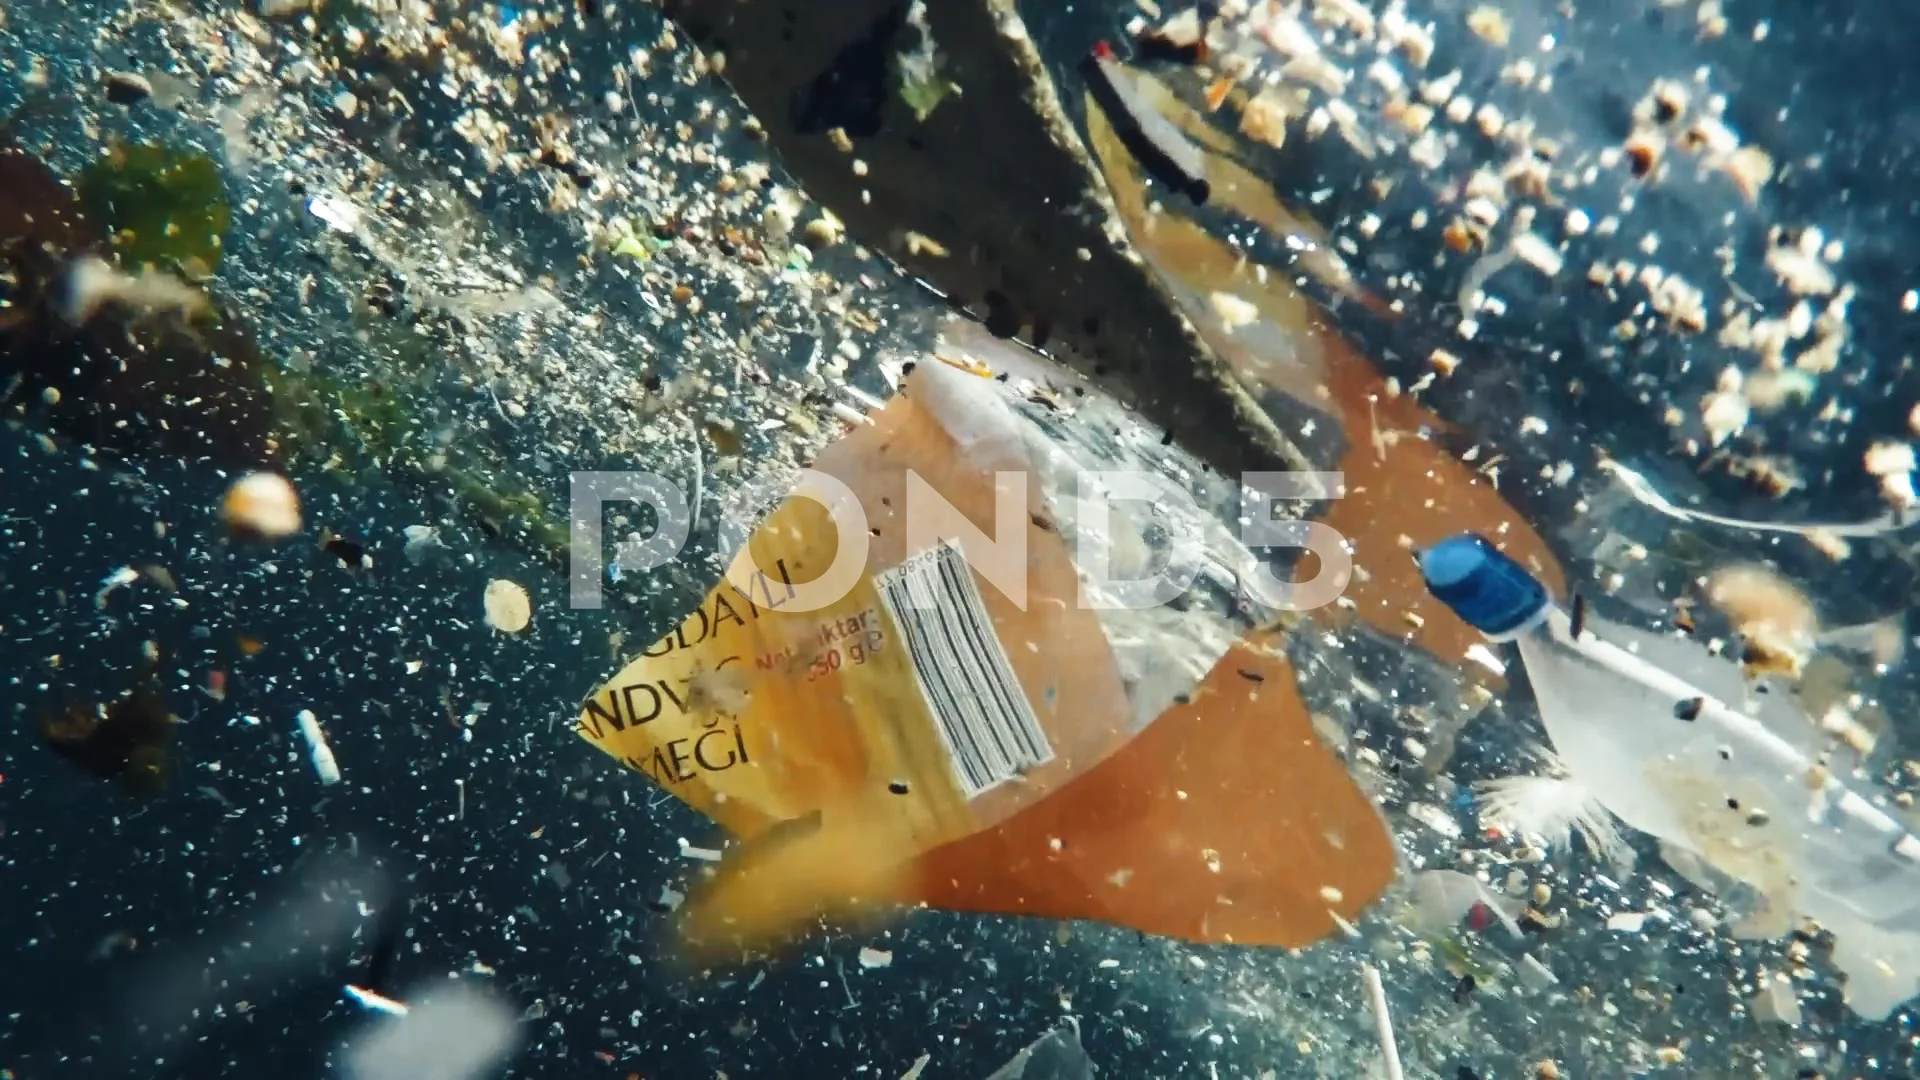 Confronting Ocean Plastic Pollution